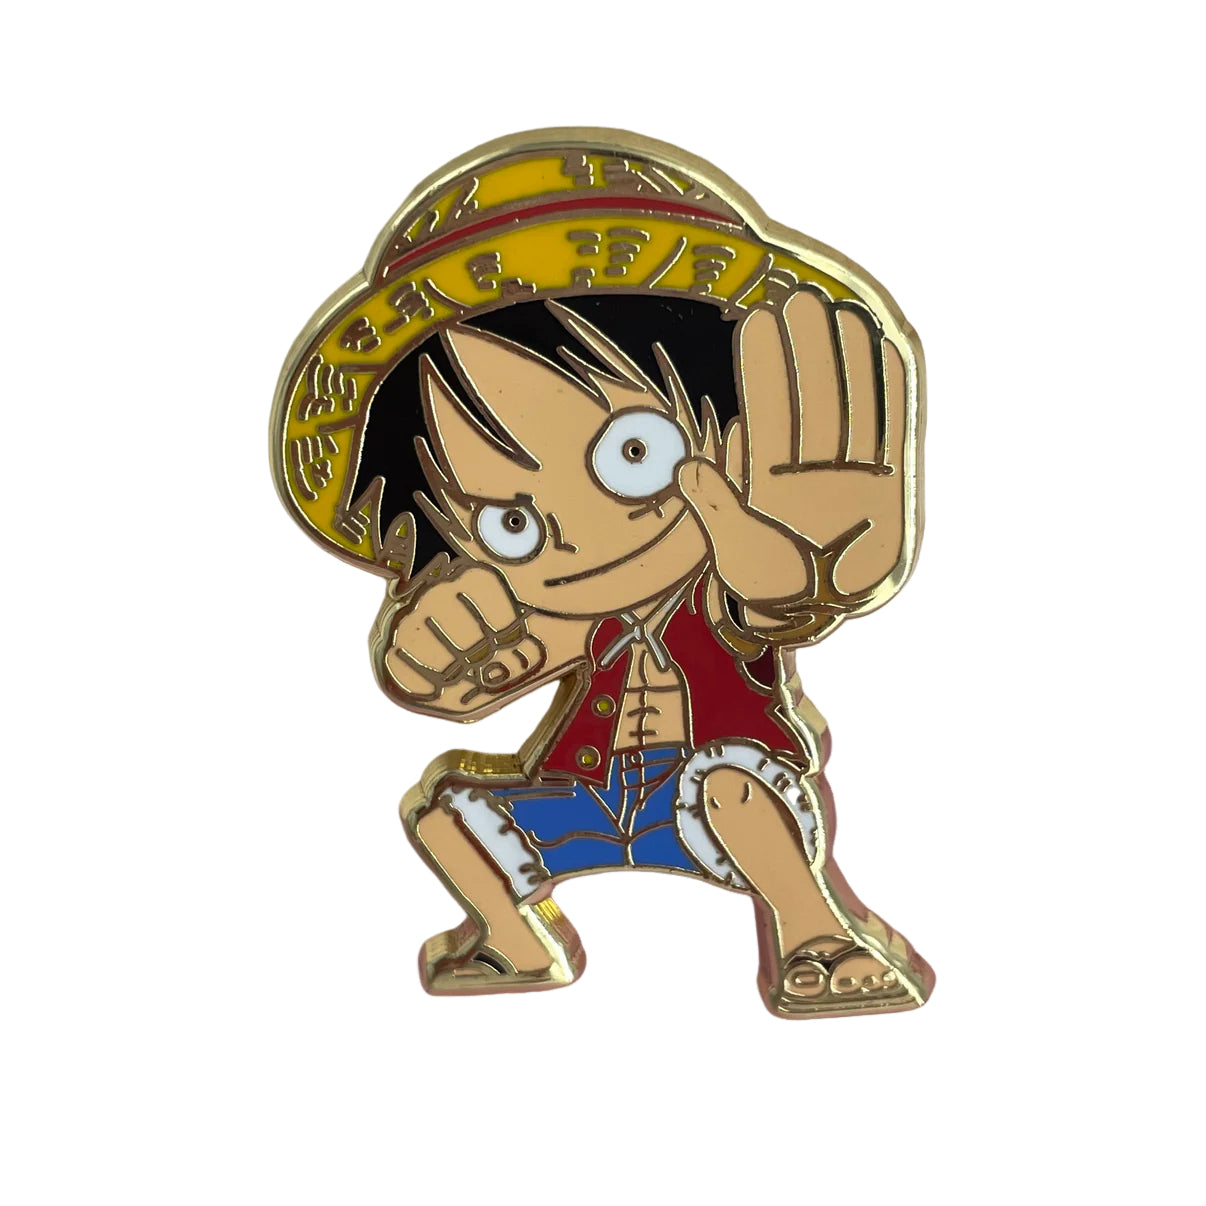 One Piece anime - Straw hat Monkey D Luffy - One Piece Anime - Pin